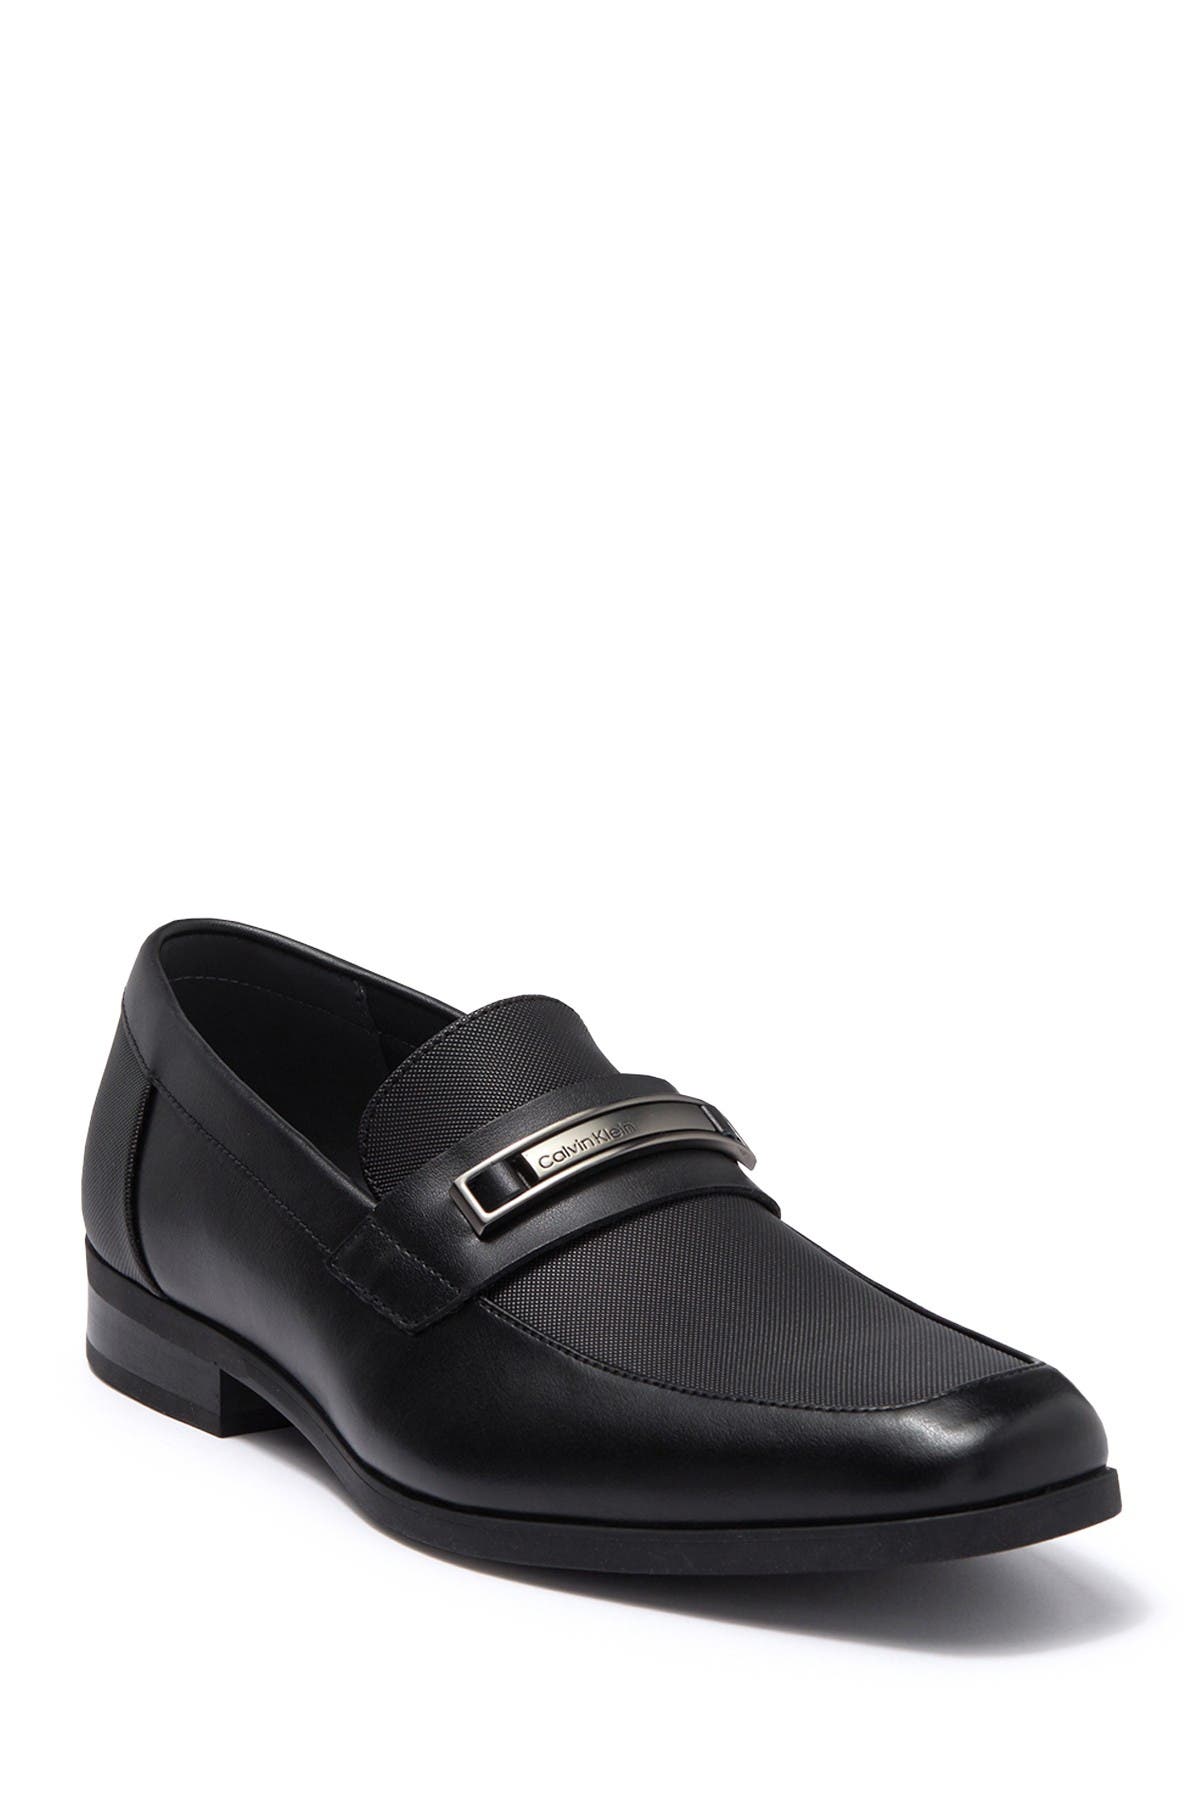 Calvin Klein Jameson Shoe In Black Leather